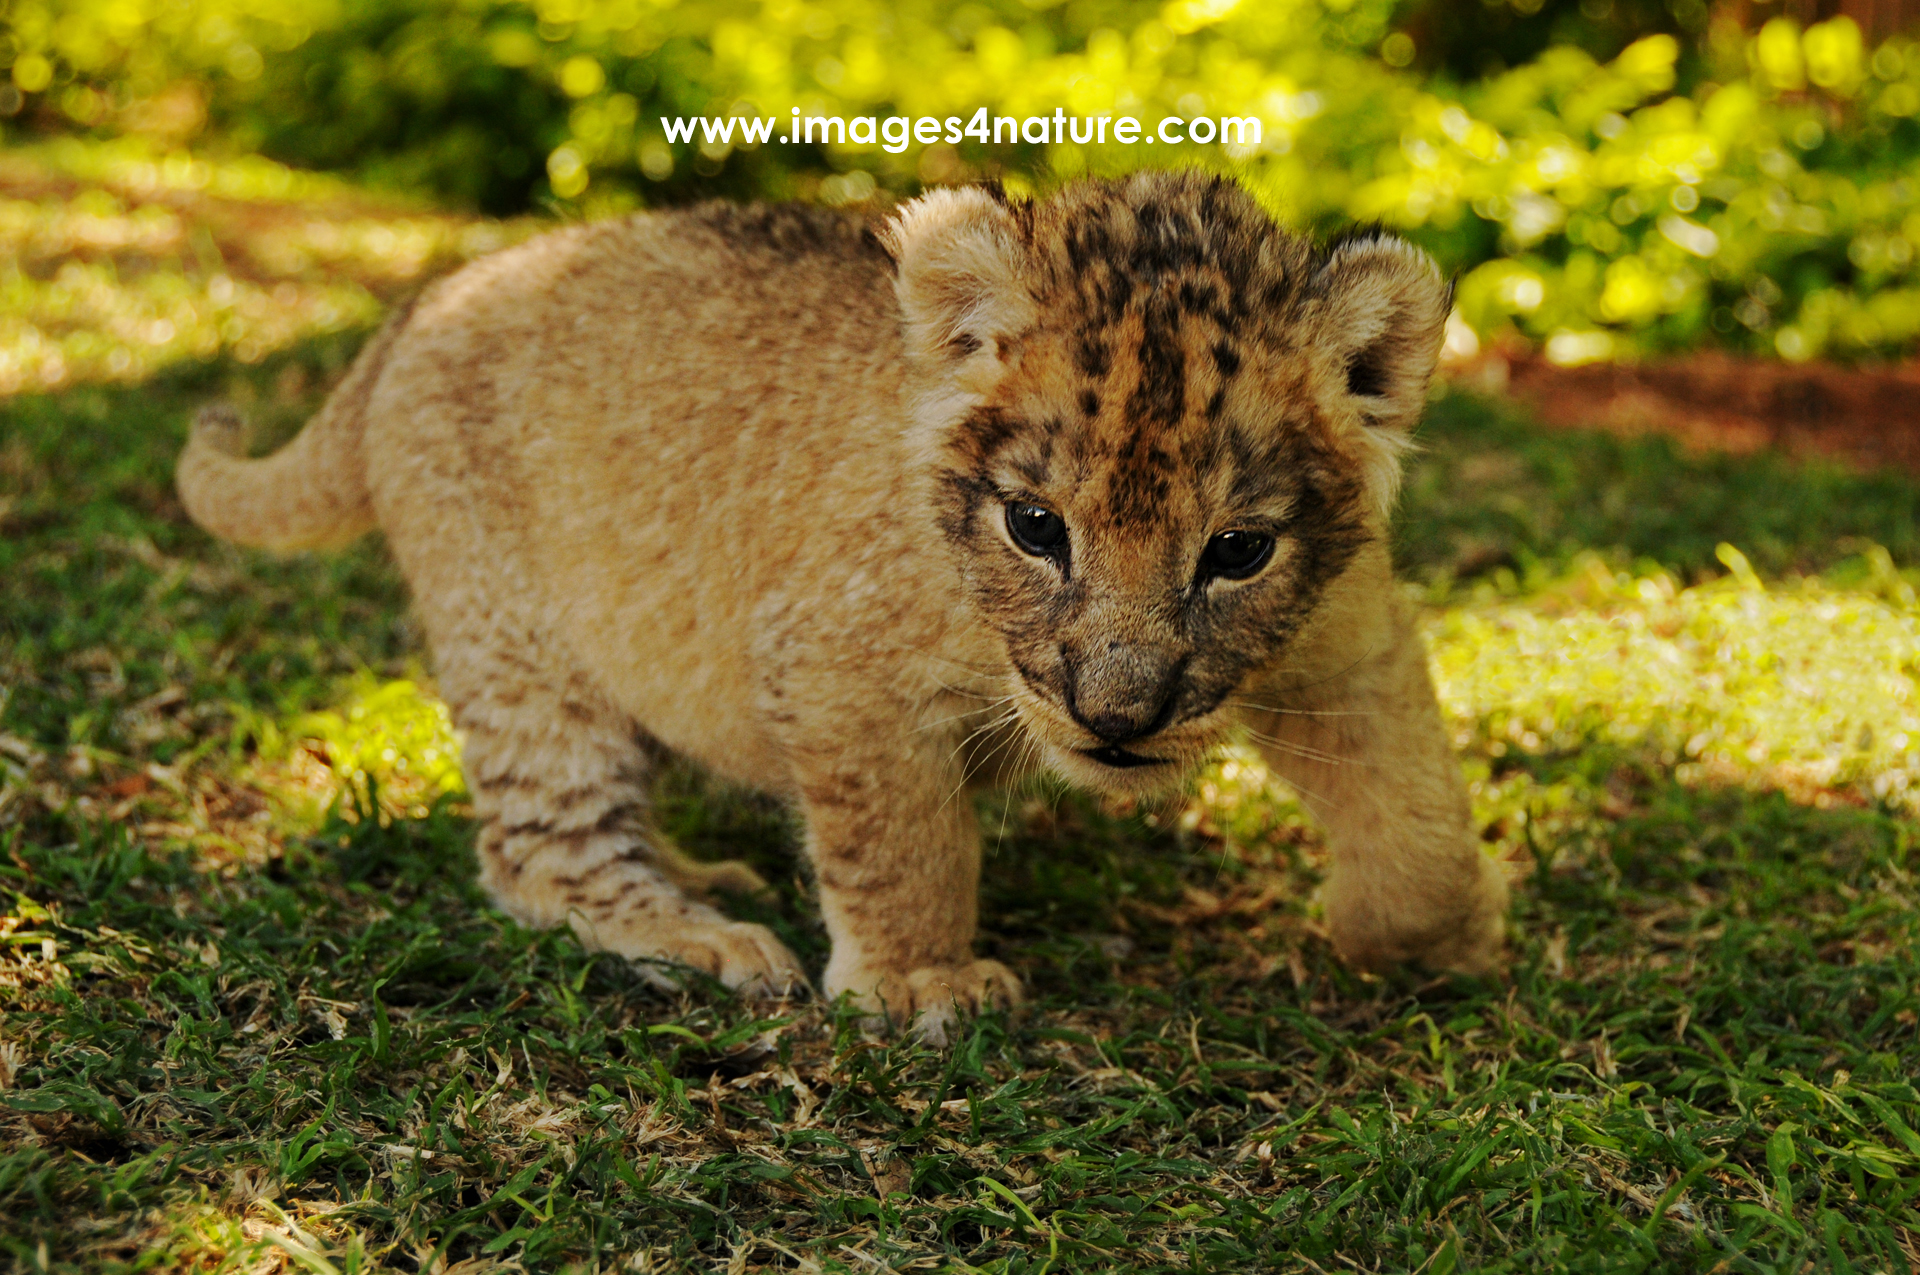 Close-up of cute lion cub exploring conservatory garden